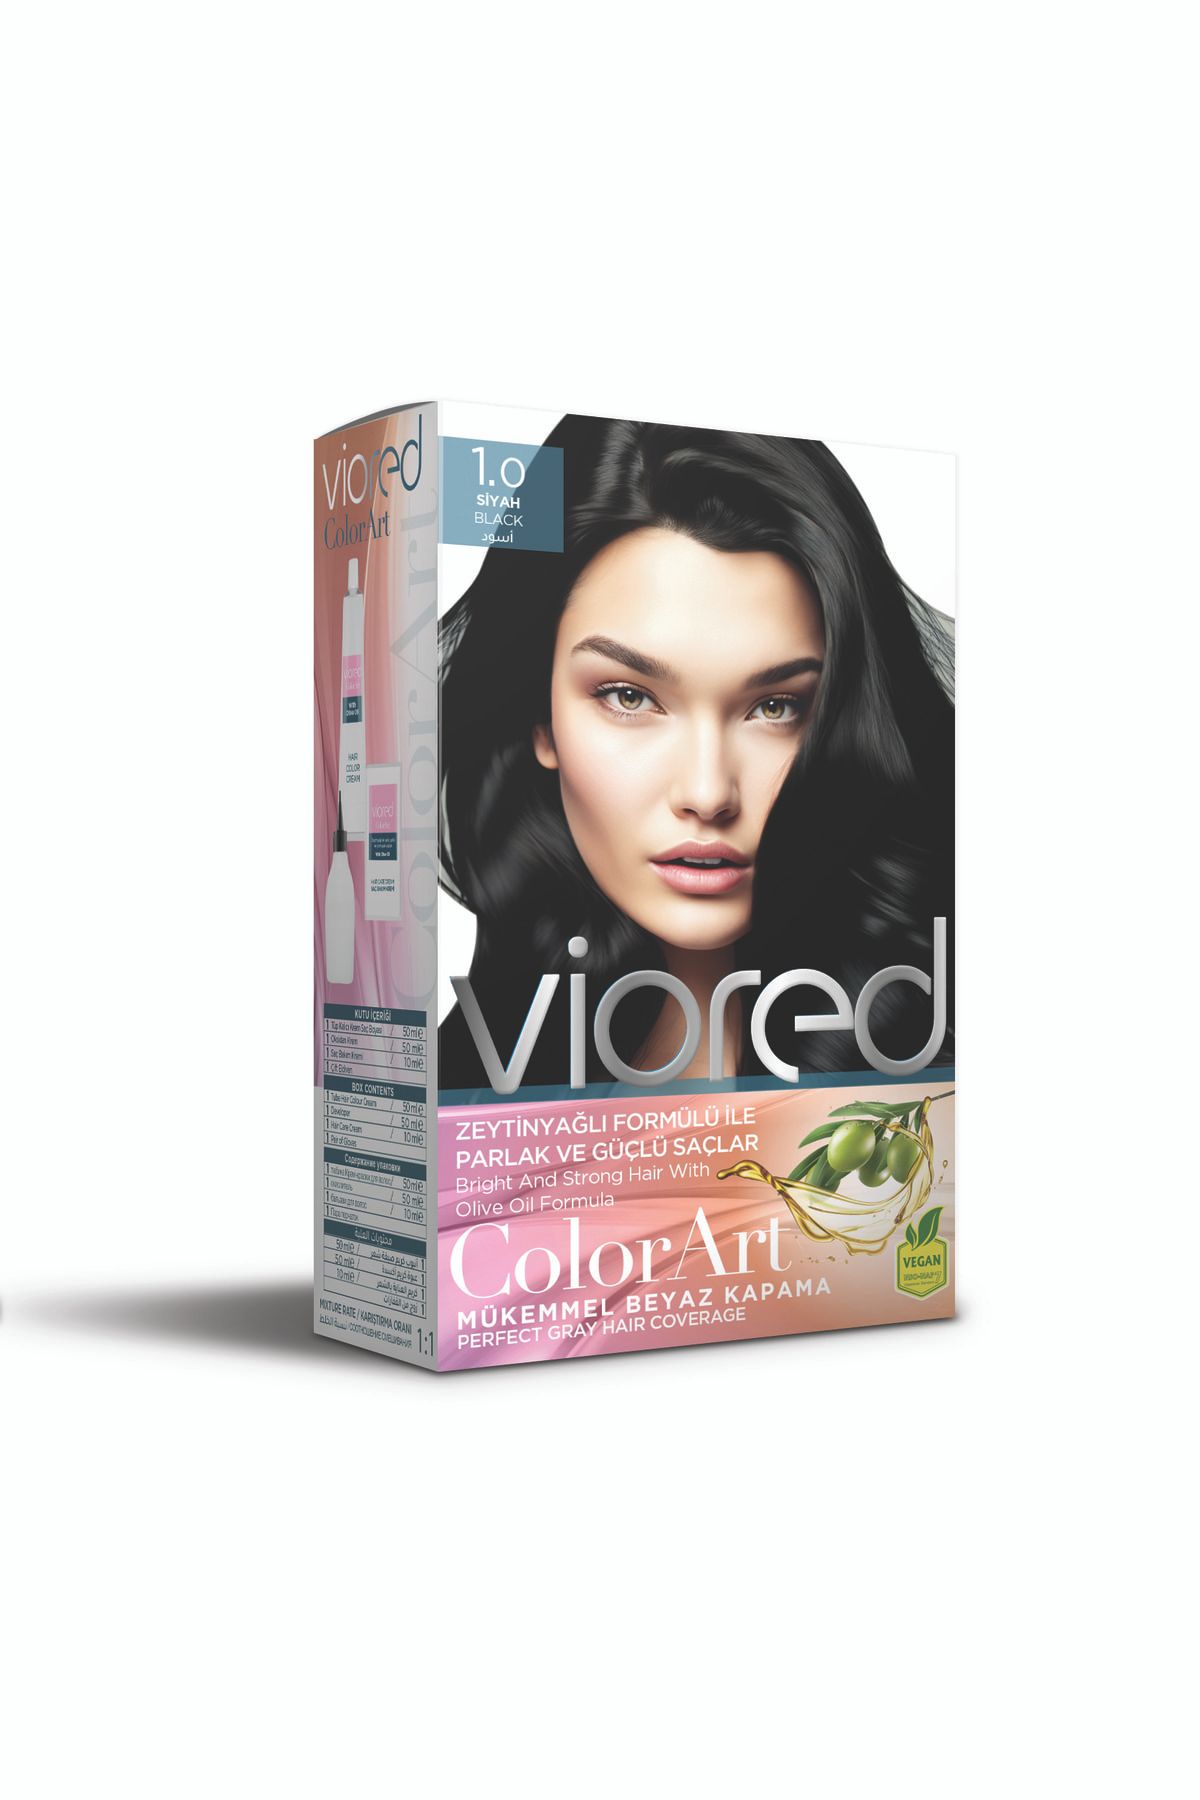 Lilafix Viored Color Art 1.0 Siyah Saç Boyası